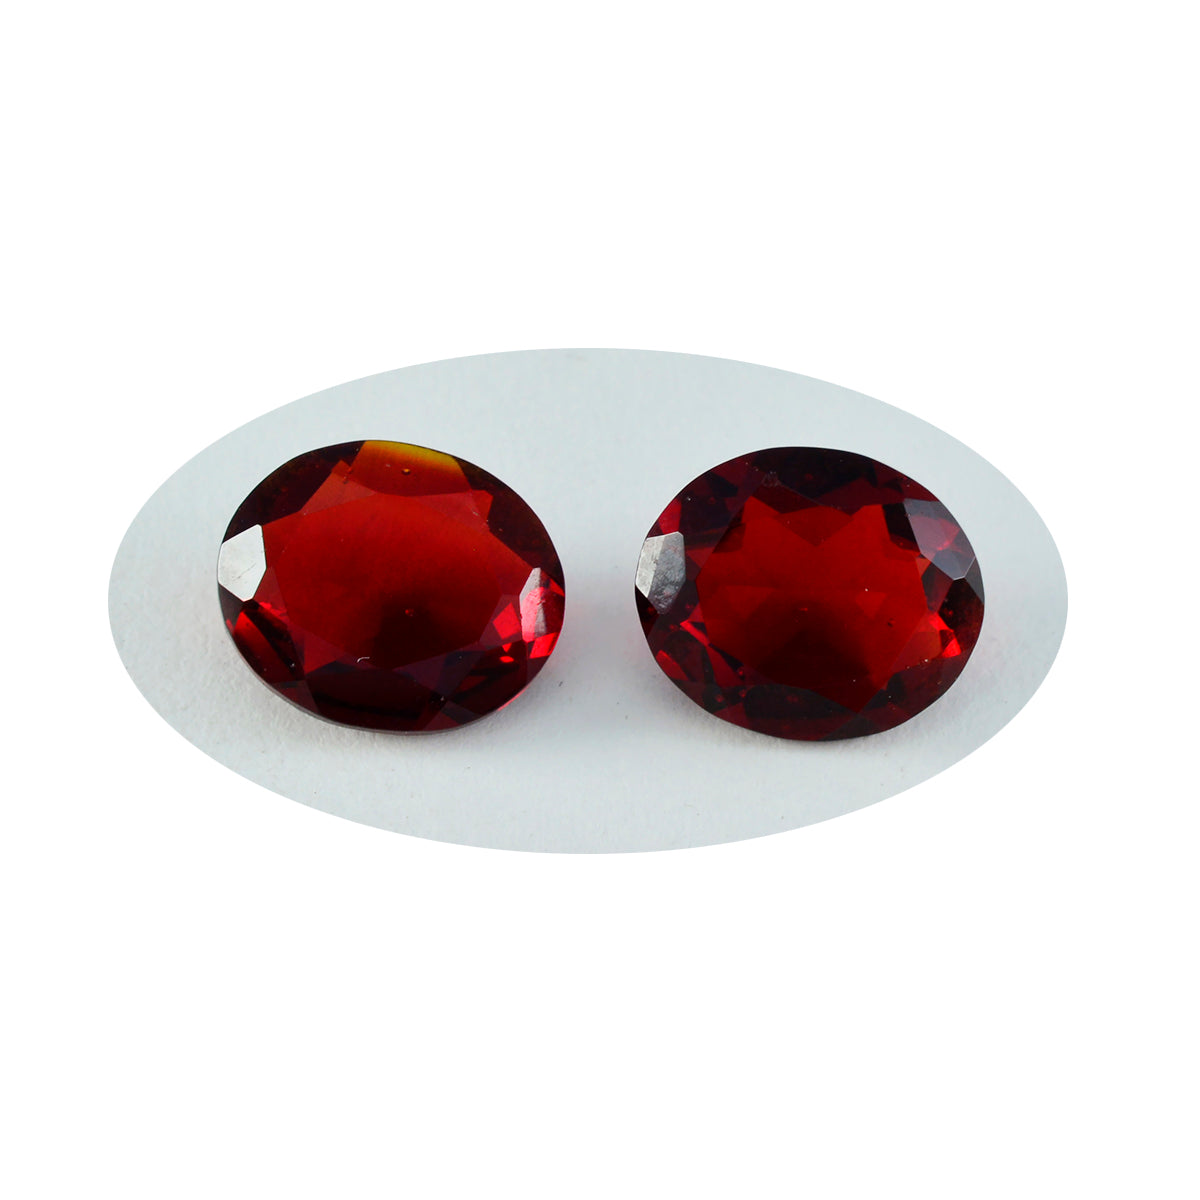 Riyogems 1PC Red Ruby CZ Faceted 10x12 mm Oval Shape fantastic Quality Loose Gems